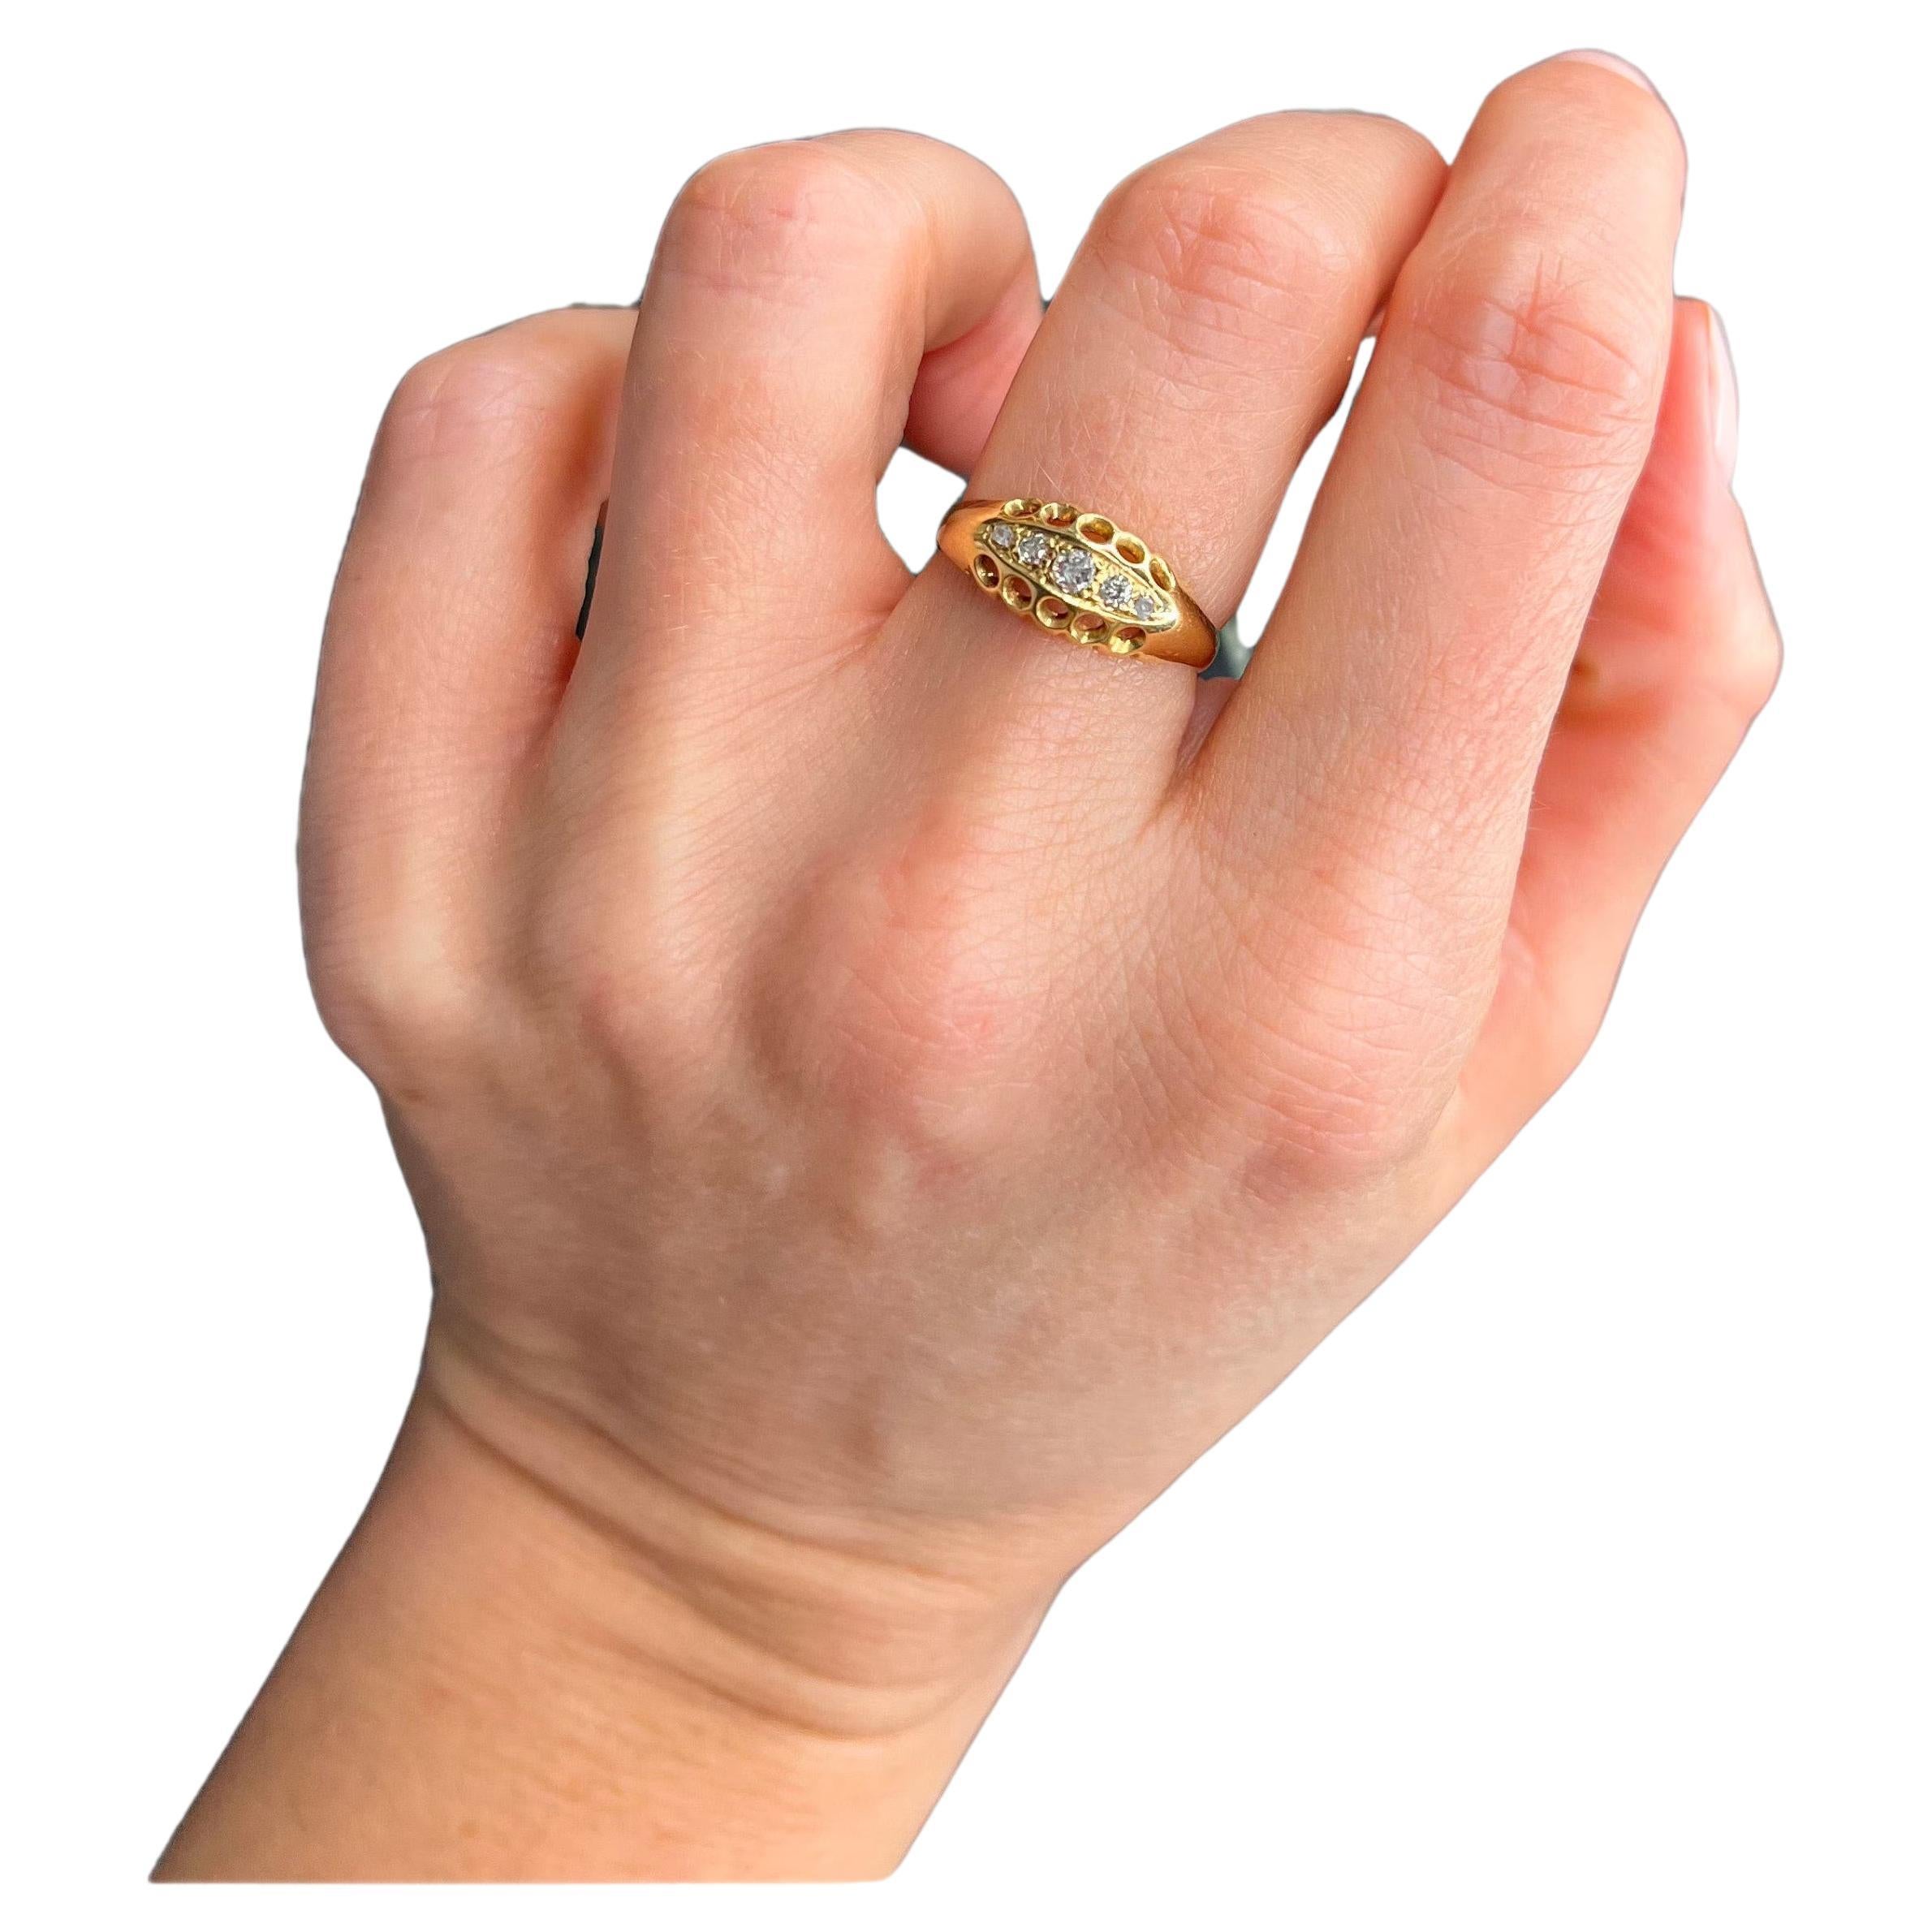  Antique 18ct Gold Edwardian 5 Stone Diamond Ring